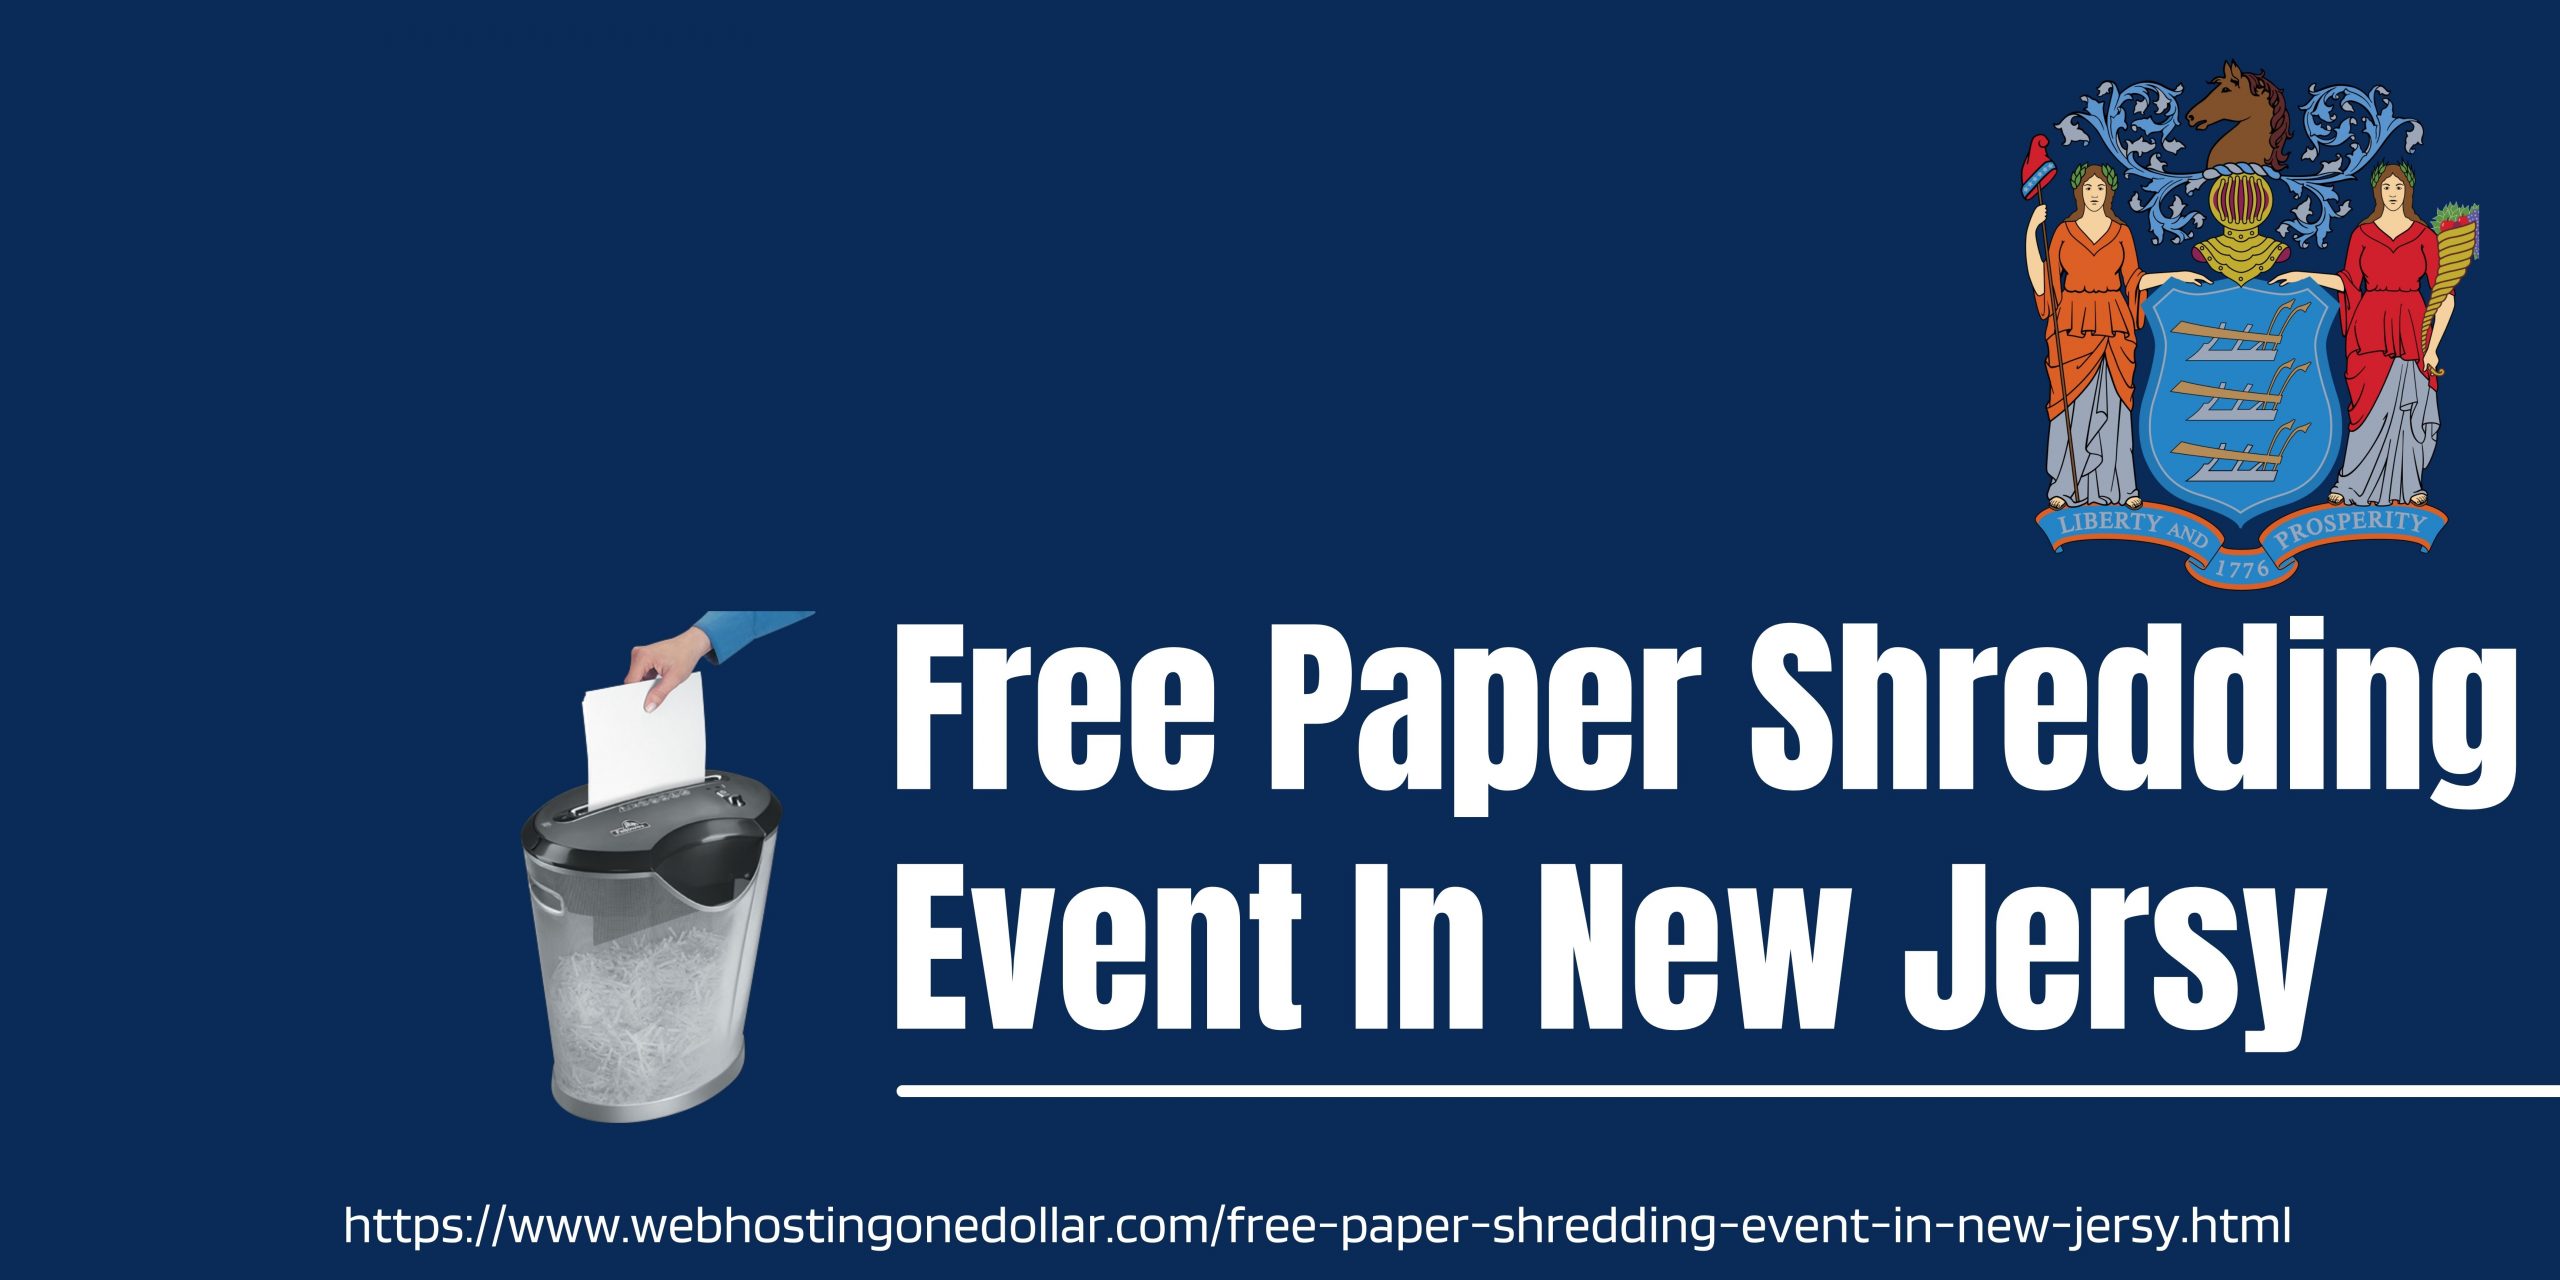 Free Paper Shredding Event In New Jersy www.wewww.webhostingonedollar.com